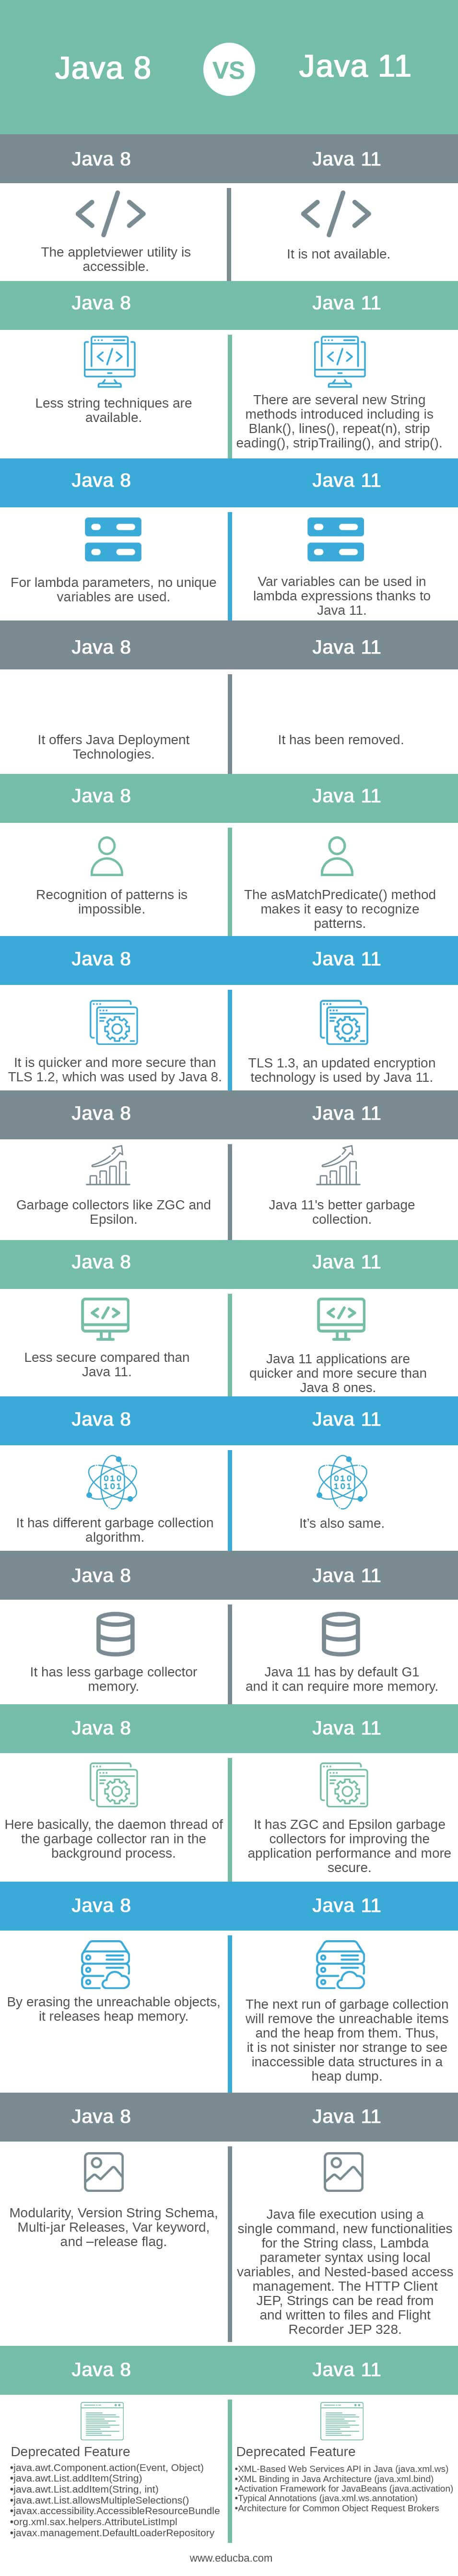 Java-8-vs-Java-11-info